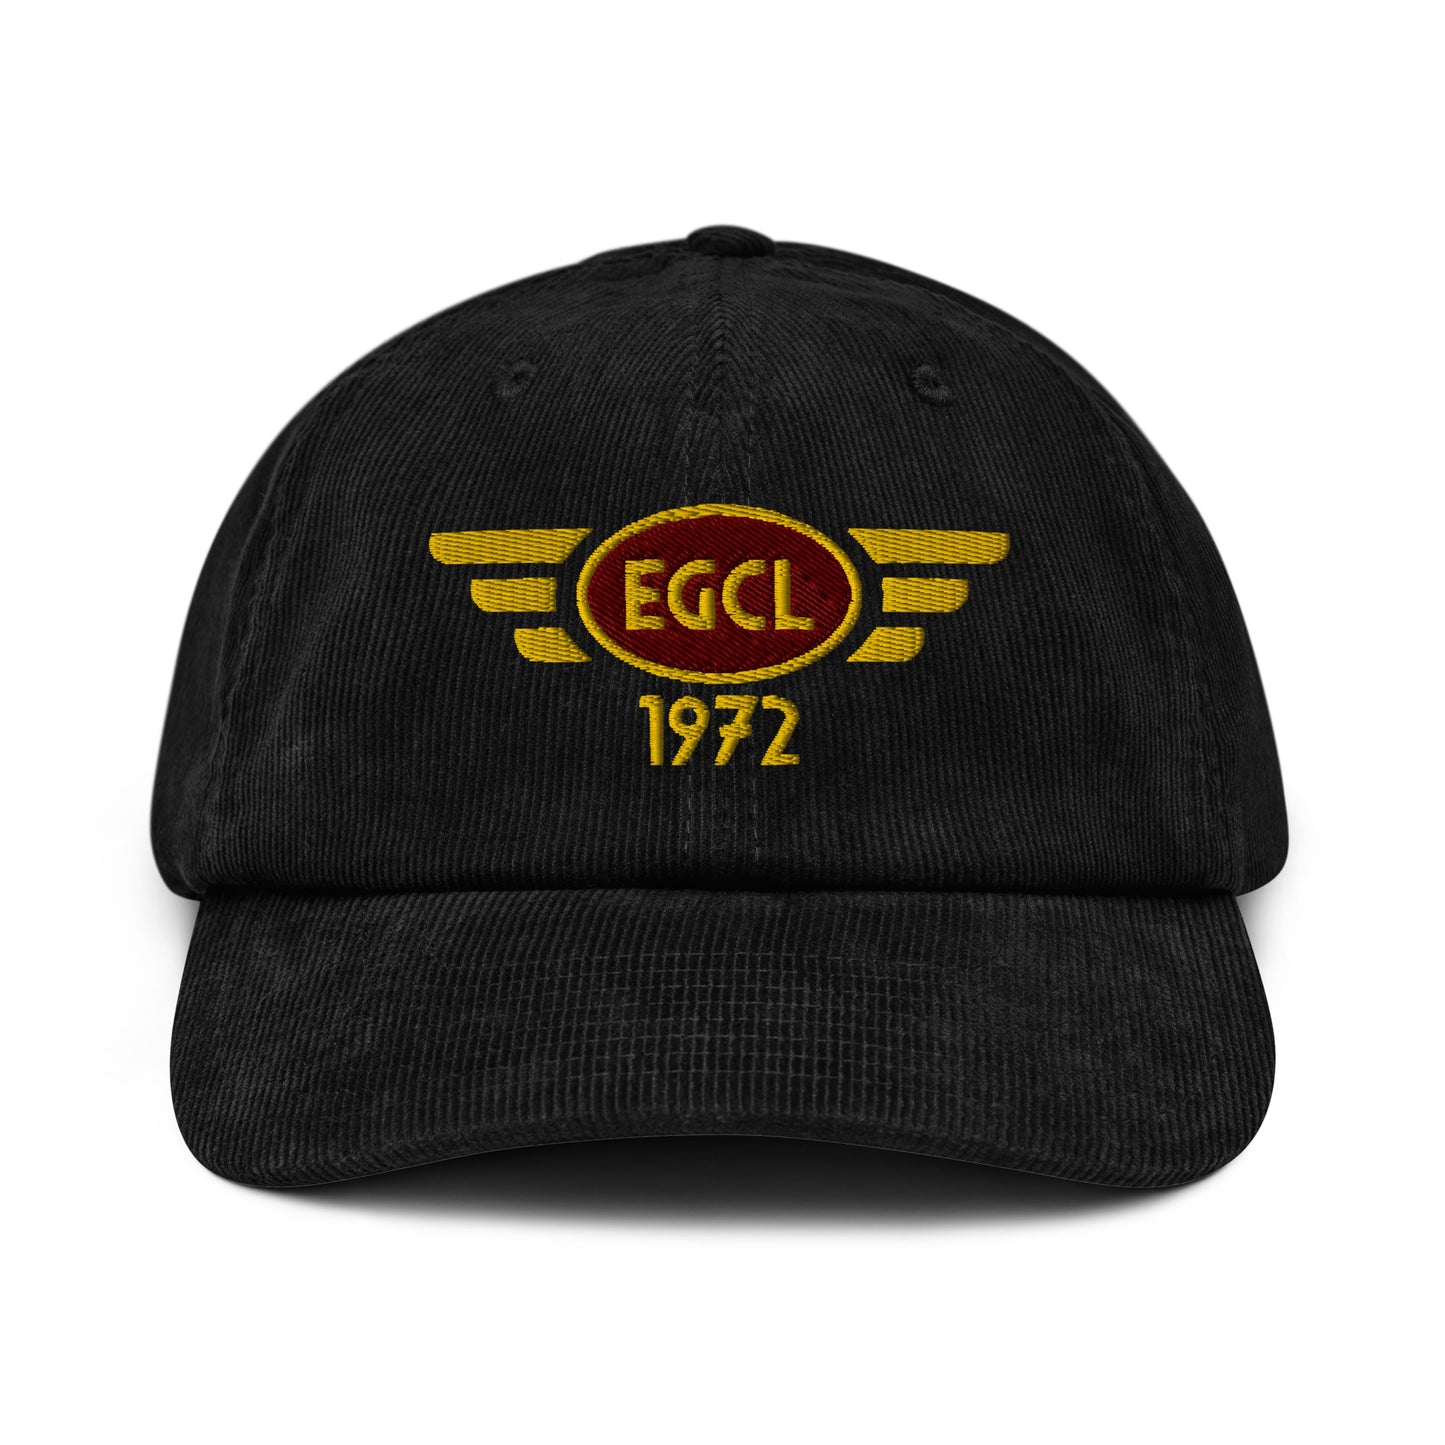 Fenland Aerodrome corduroy cap with embroidered ICAO code.